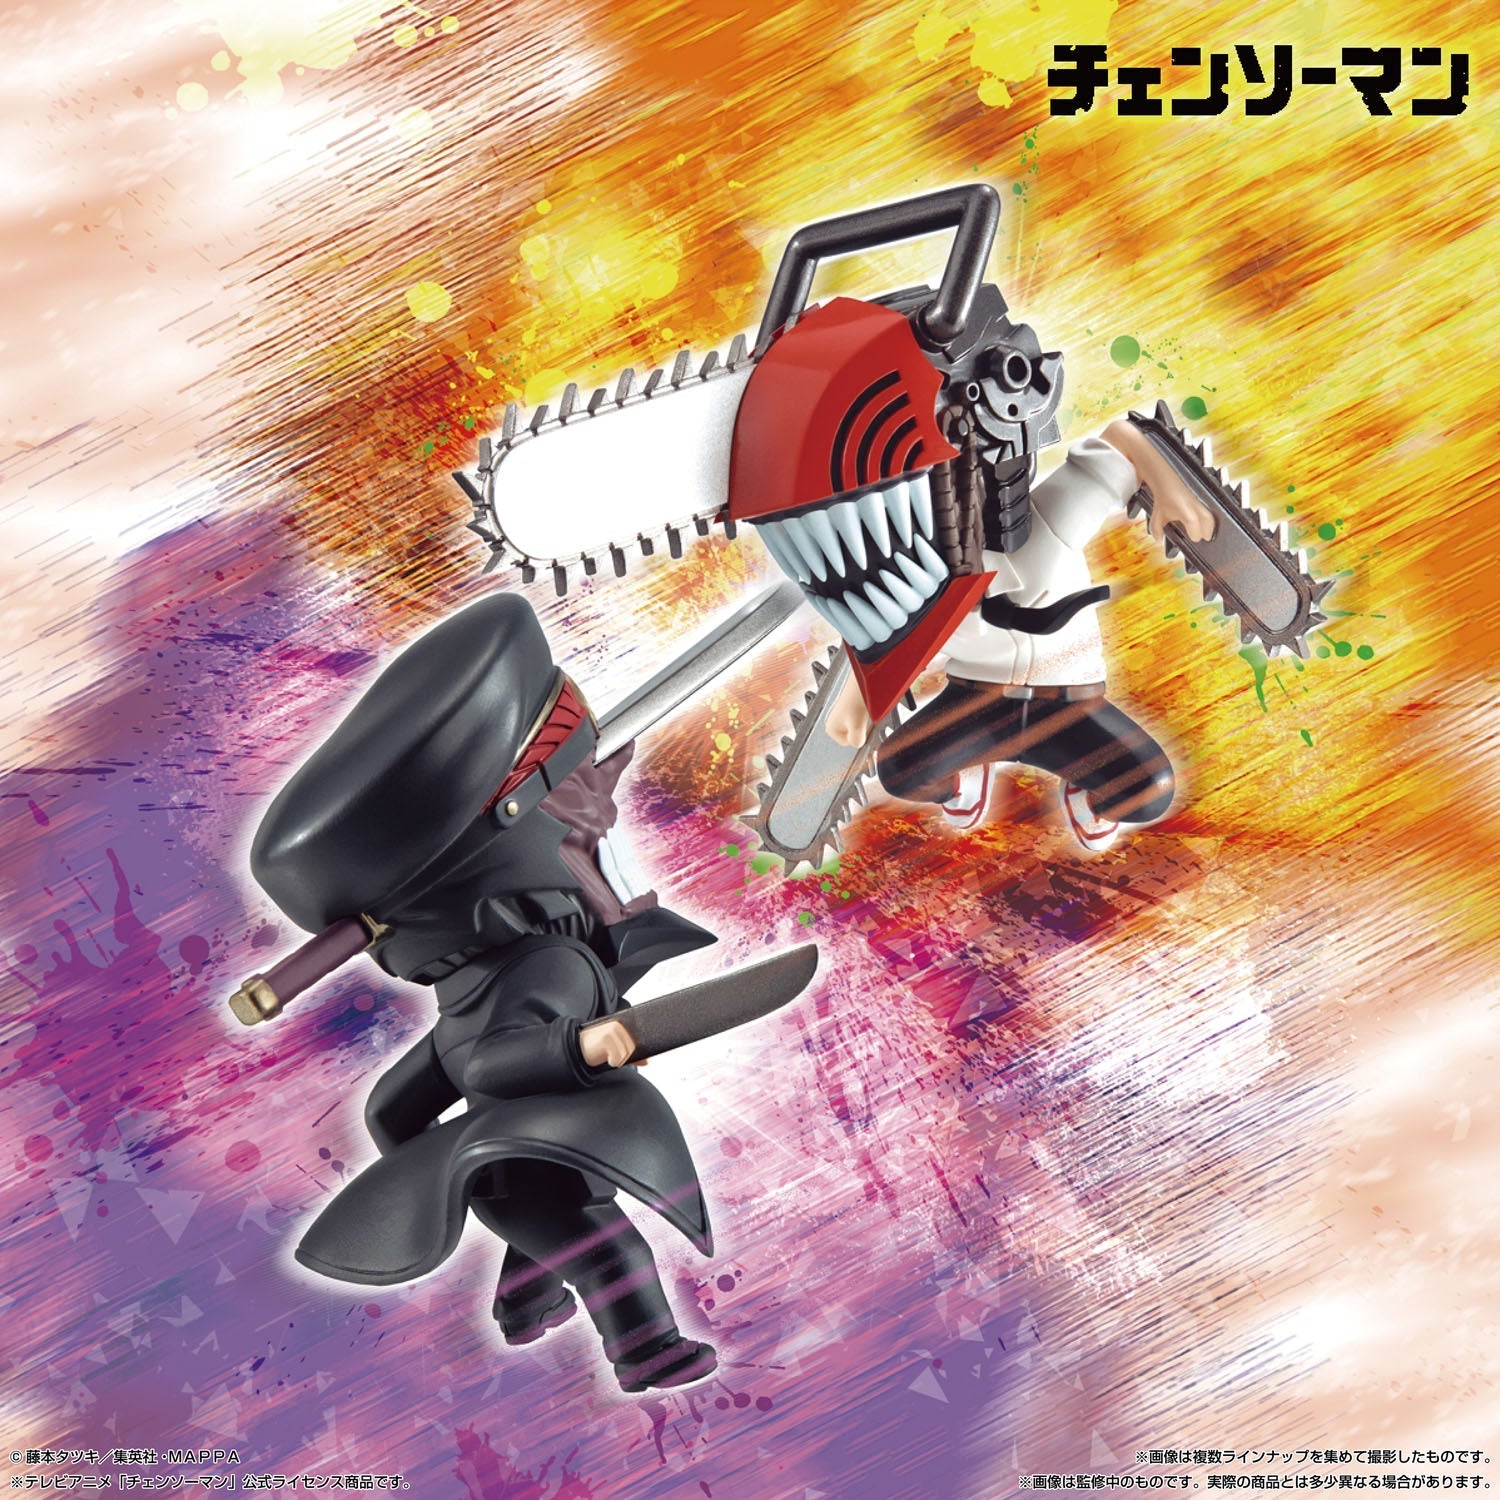 Chainsaw Man - Chainsaw Man 6 Character Adverge Motion Bandai Shokugan Adverge Figure Set image count 9